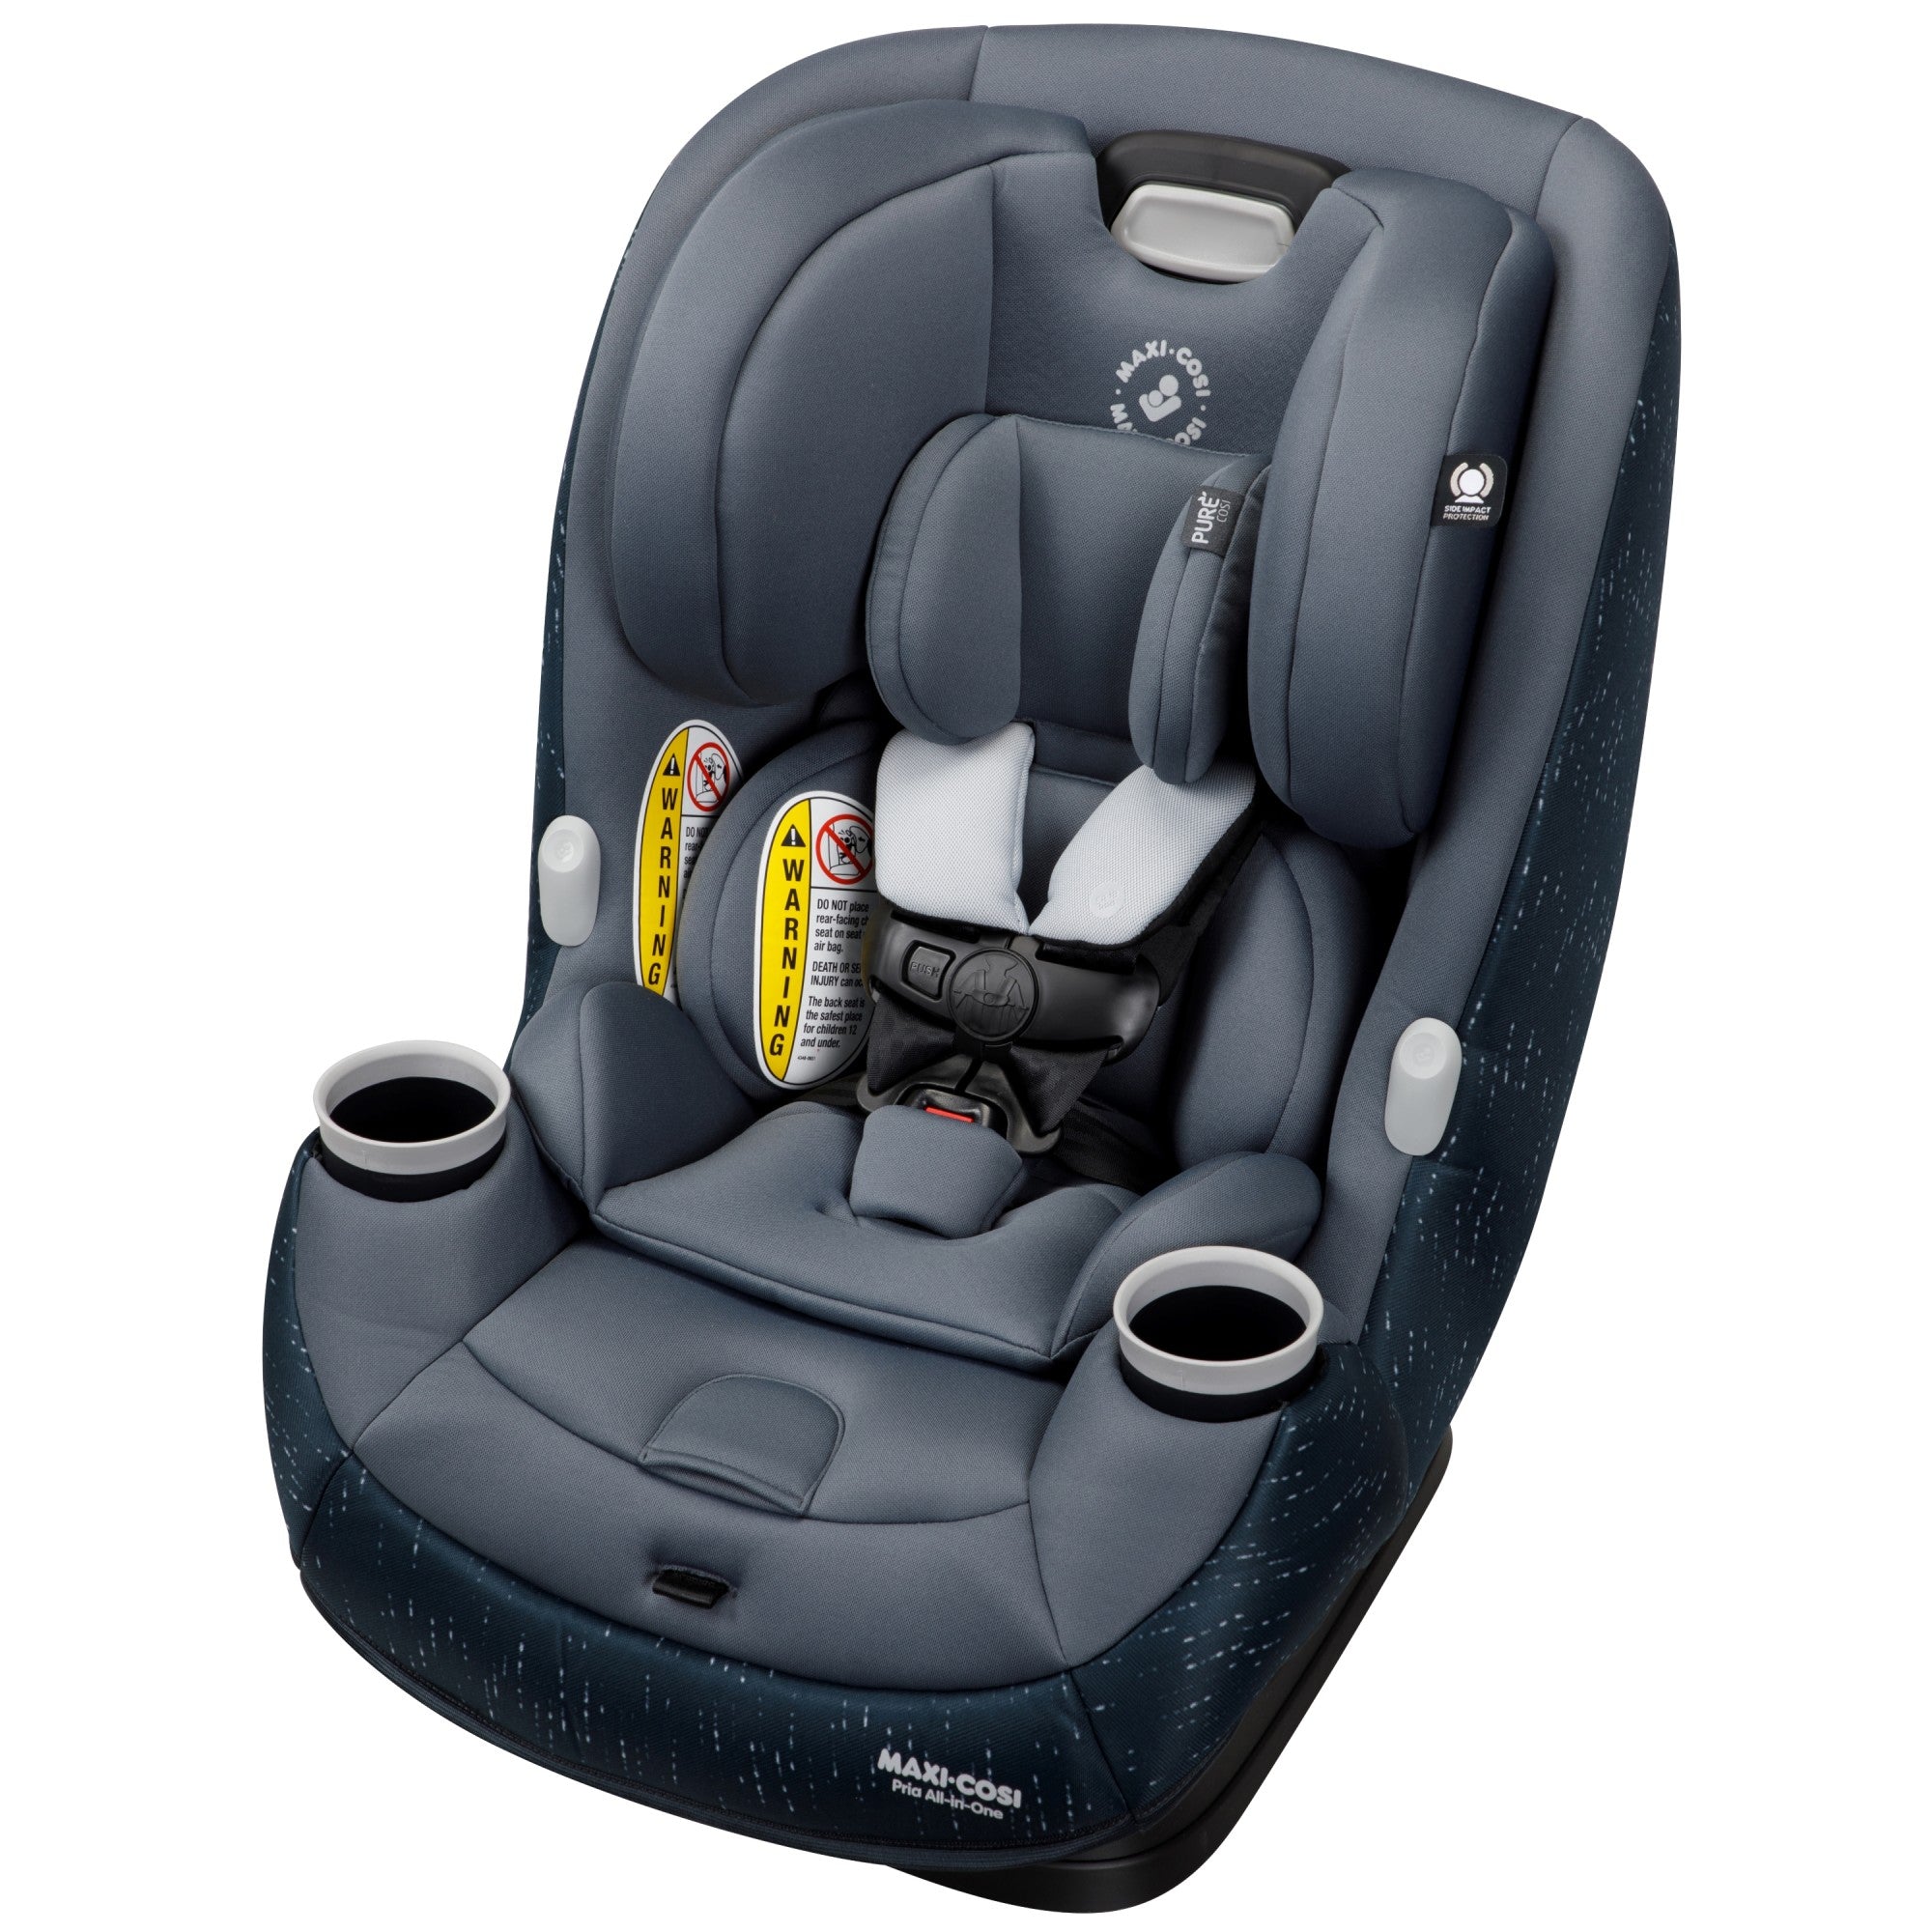 Pria™ All-in-One Convertible Car Seat - Sonar Grey – PureCosi